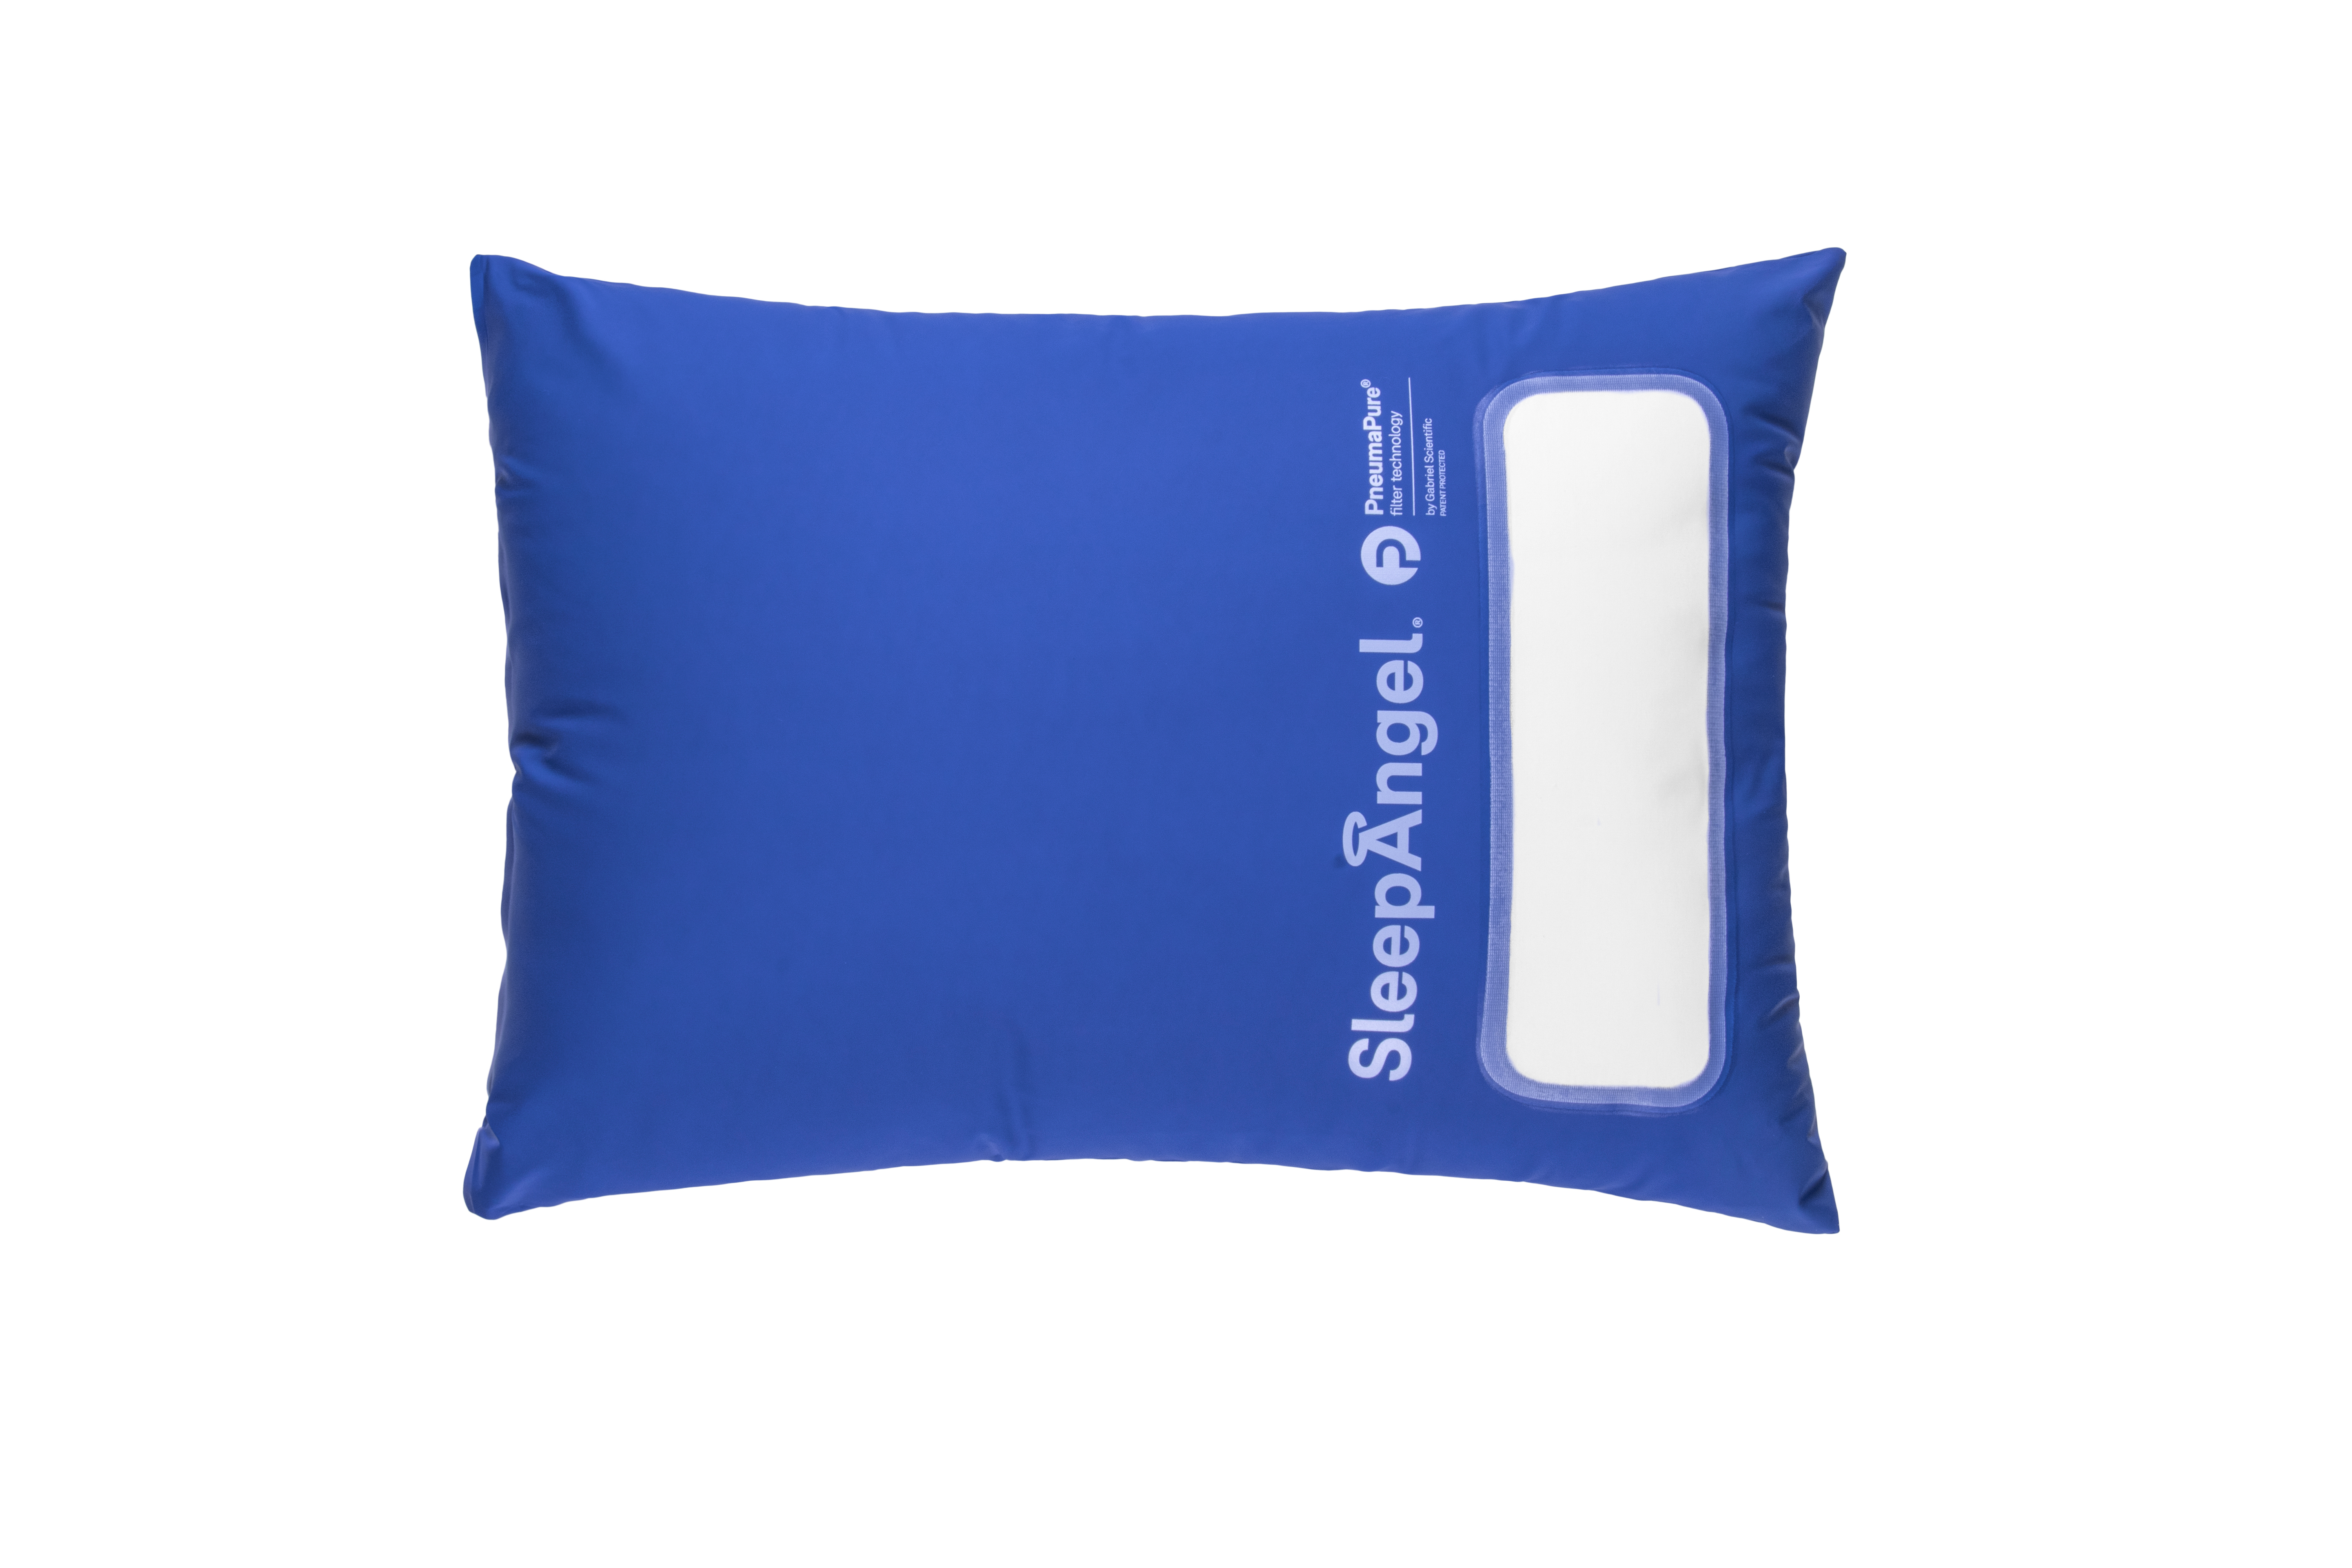 SleepAngel Medical positioner pillow soap 2021 11